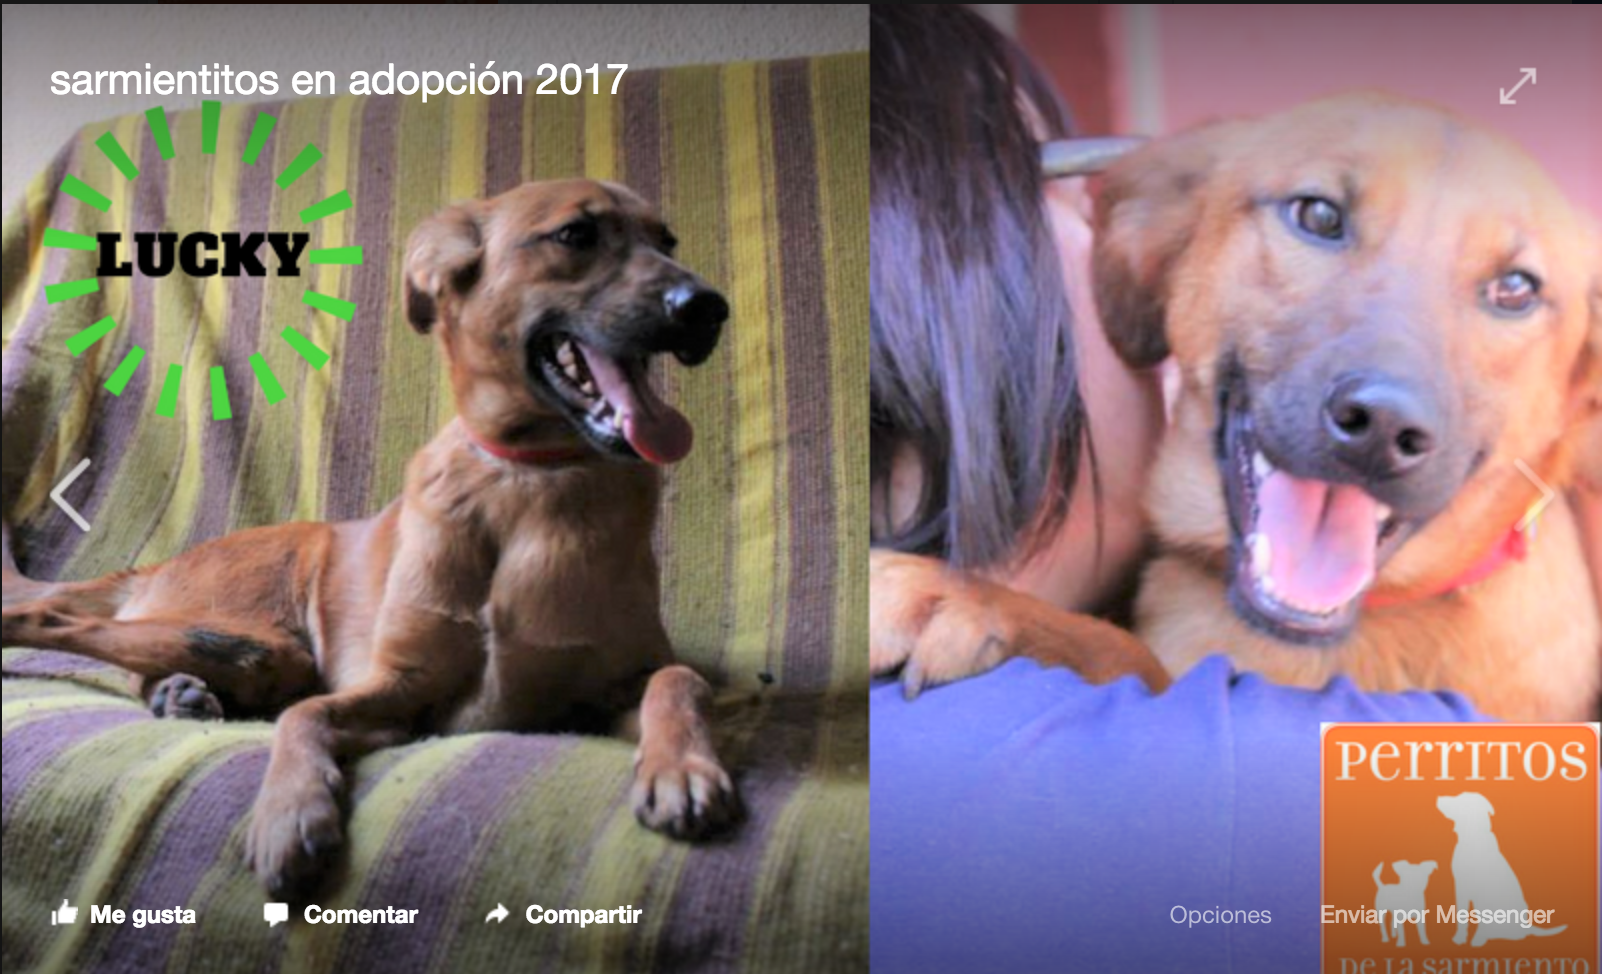 A dog named Lucky in adoption at the Buenos Aires animal shelter, Sociedad Protectora de Animales Sarmiento